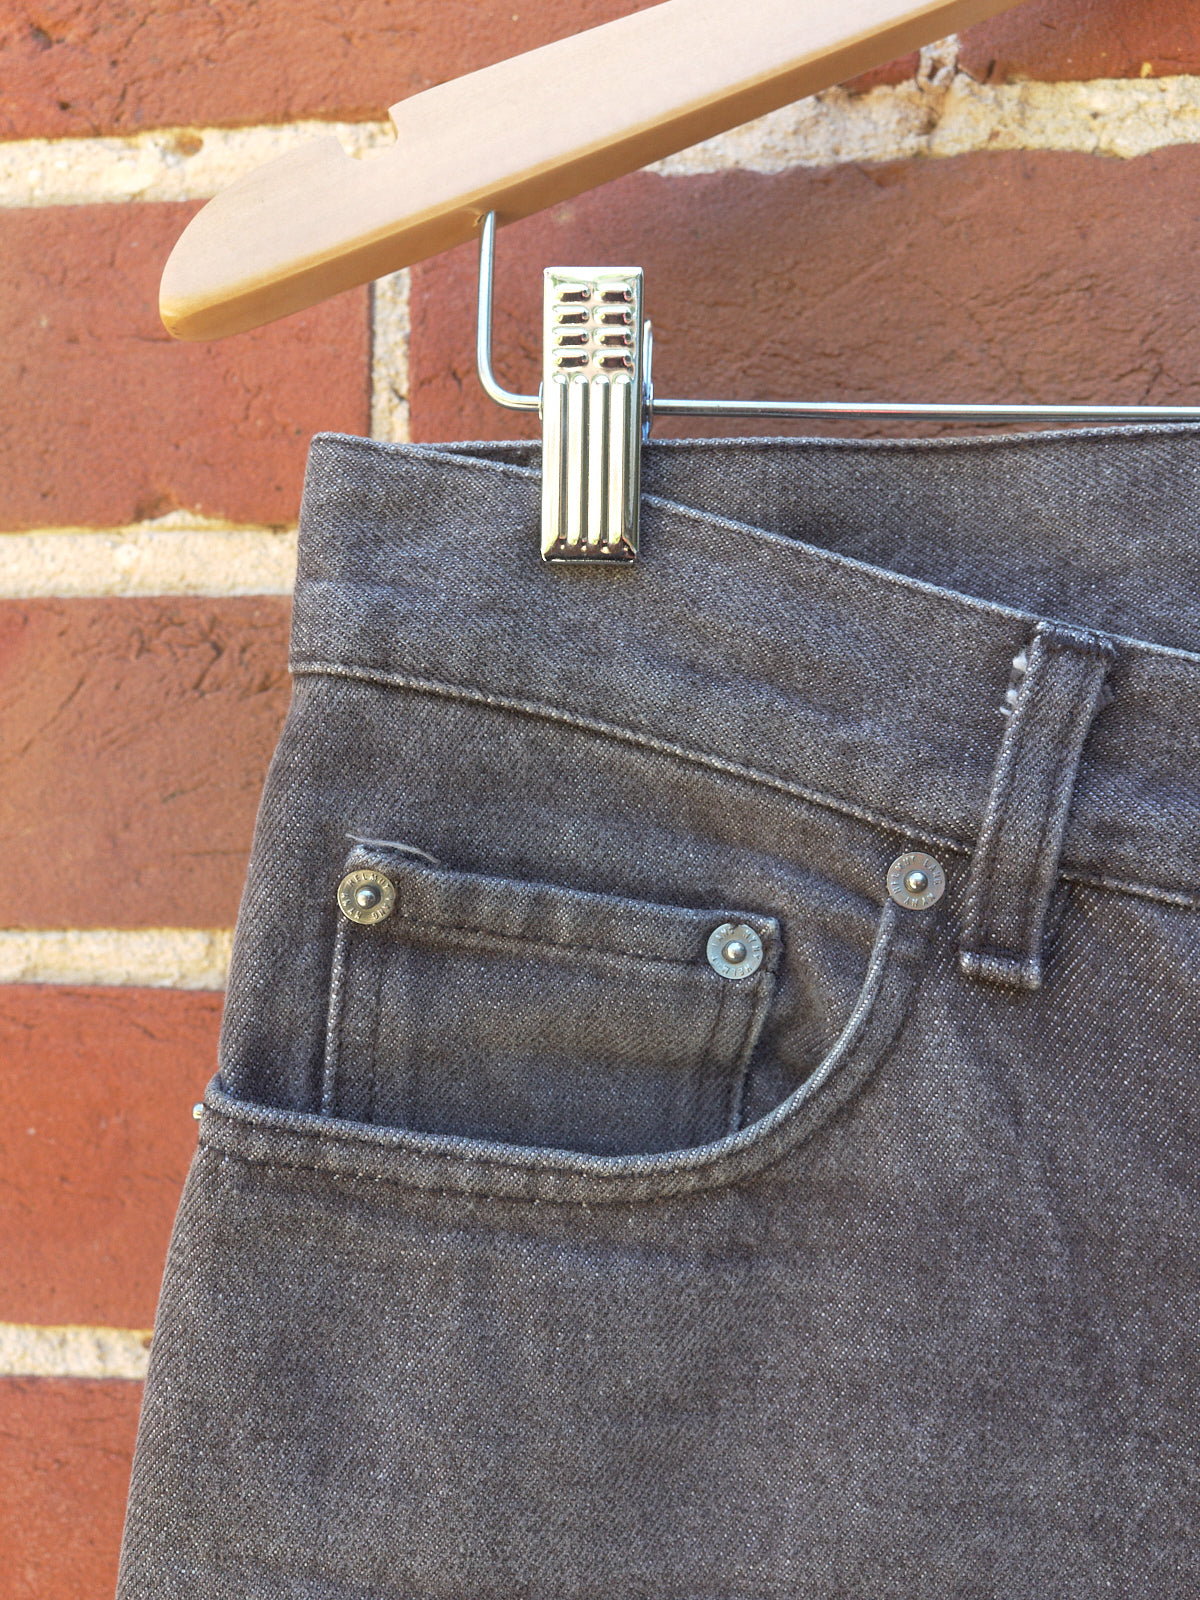 helmut lang grey raw denim 'classic cut' jeans